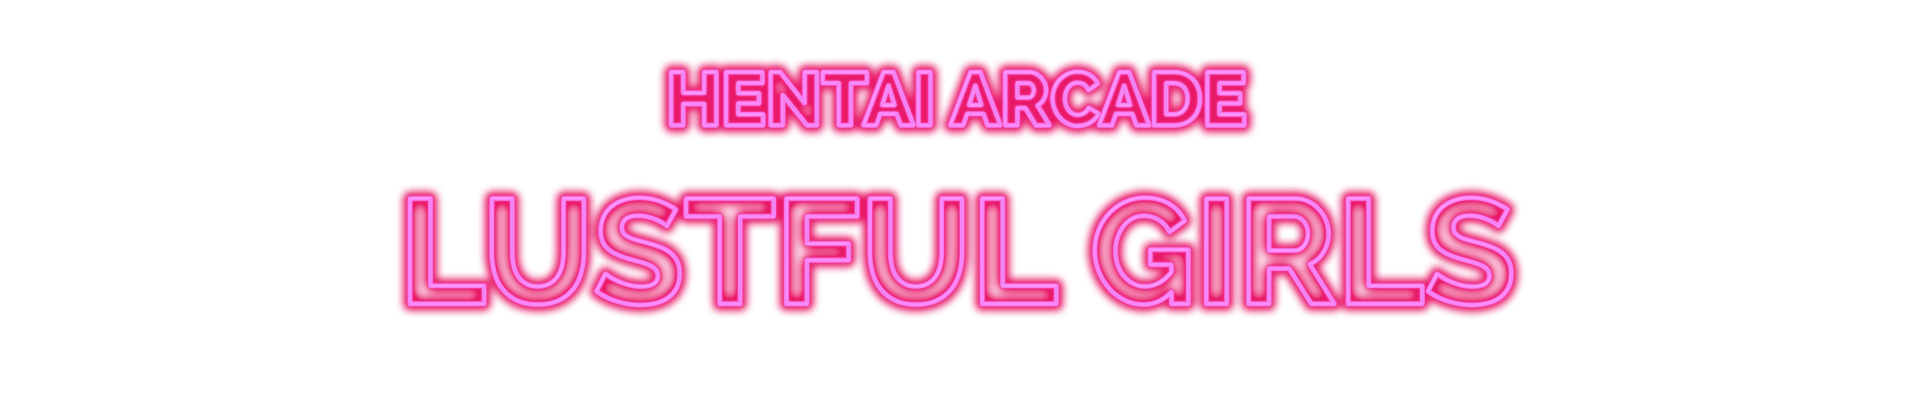 HENTAI Arcade: Lustful Girls